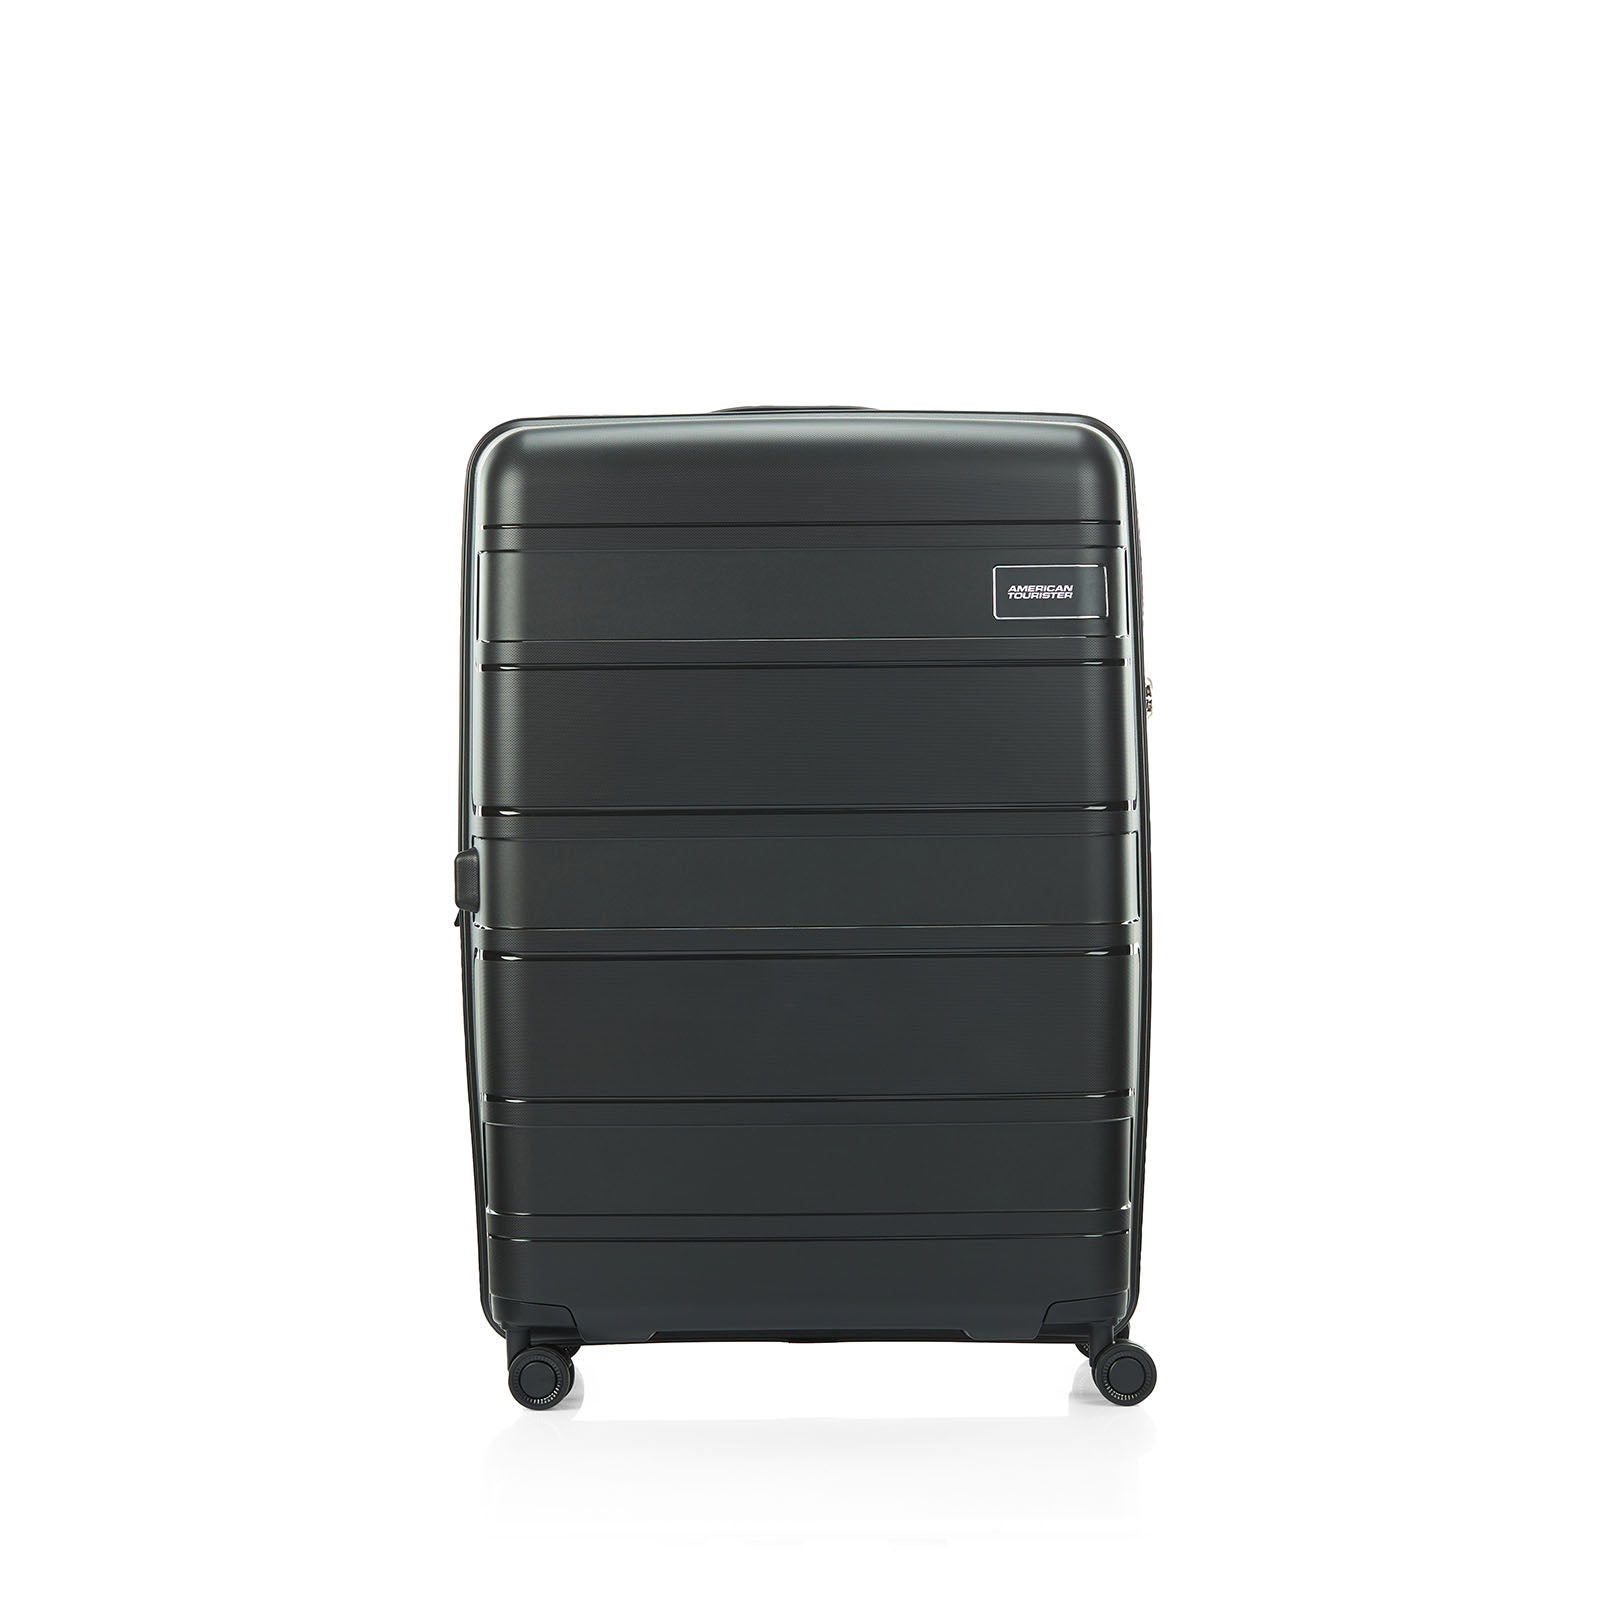 American-Tourister-Light-Max-82cm-Suitcase-Black-Front